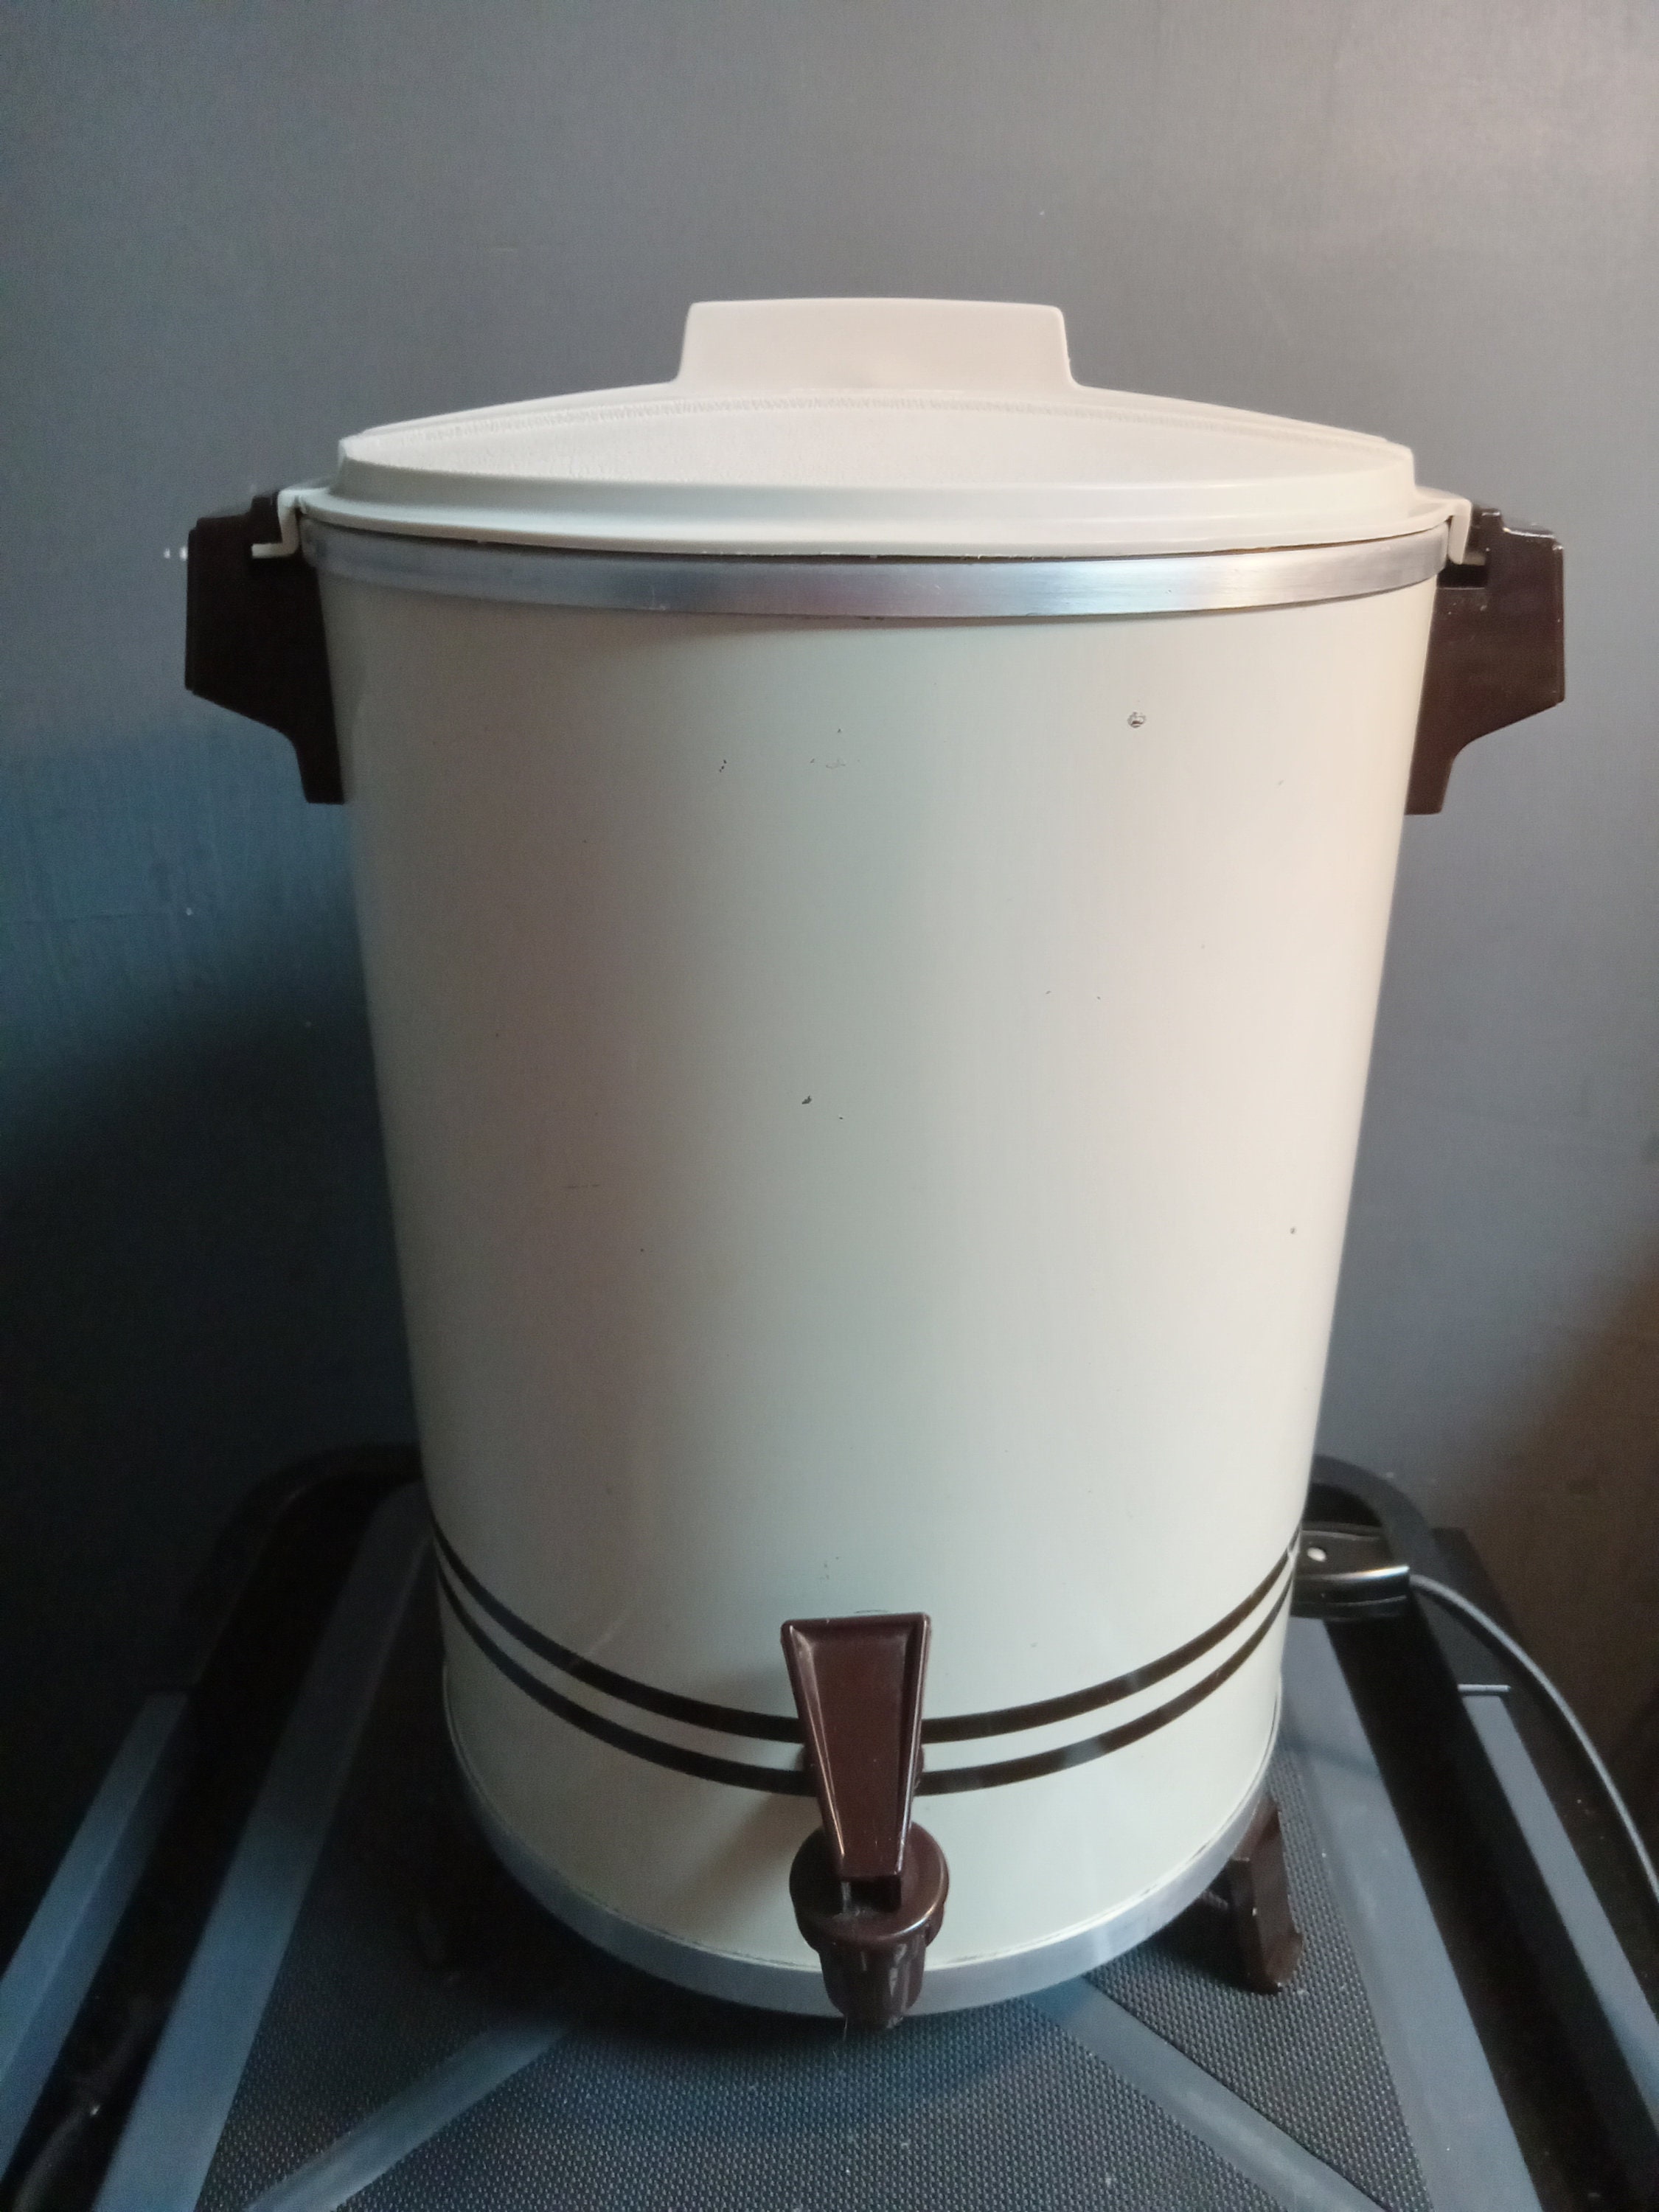 ZhdnBhnos 30-Cup Commercial Coffee Urn Percolator Tea Maker